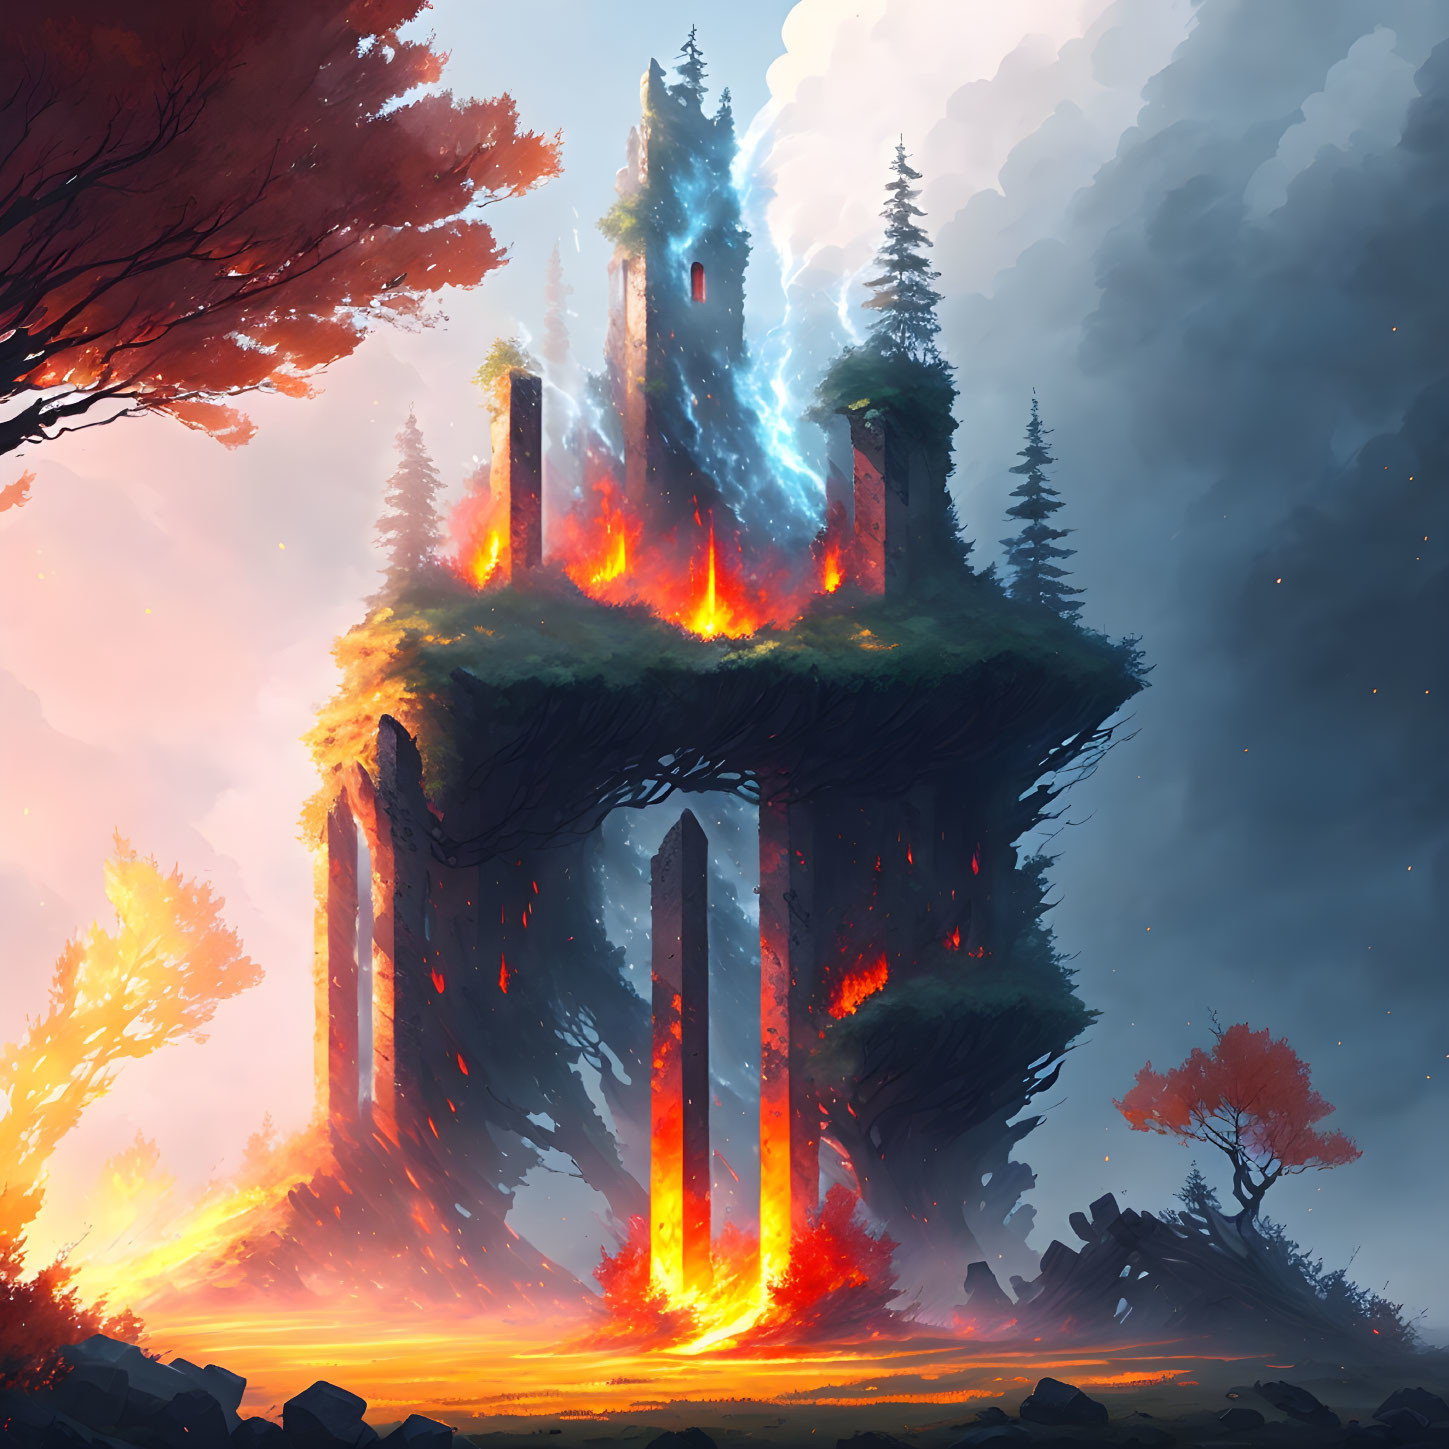 Fantasy illustration of floating island with burning castle, lava, and autumn scenery